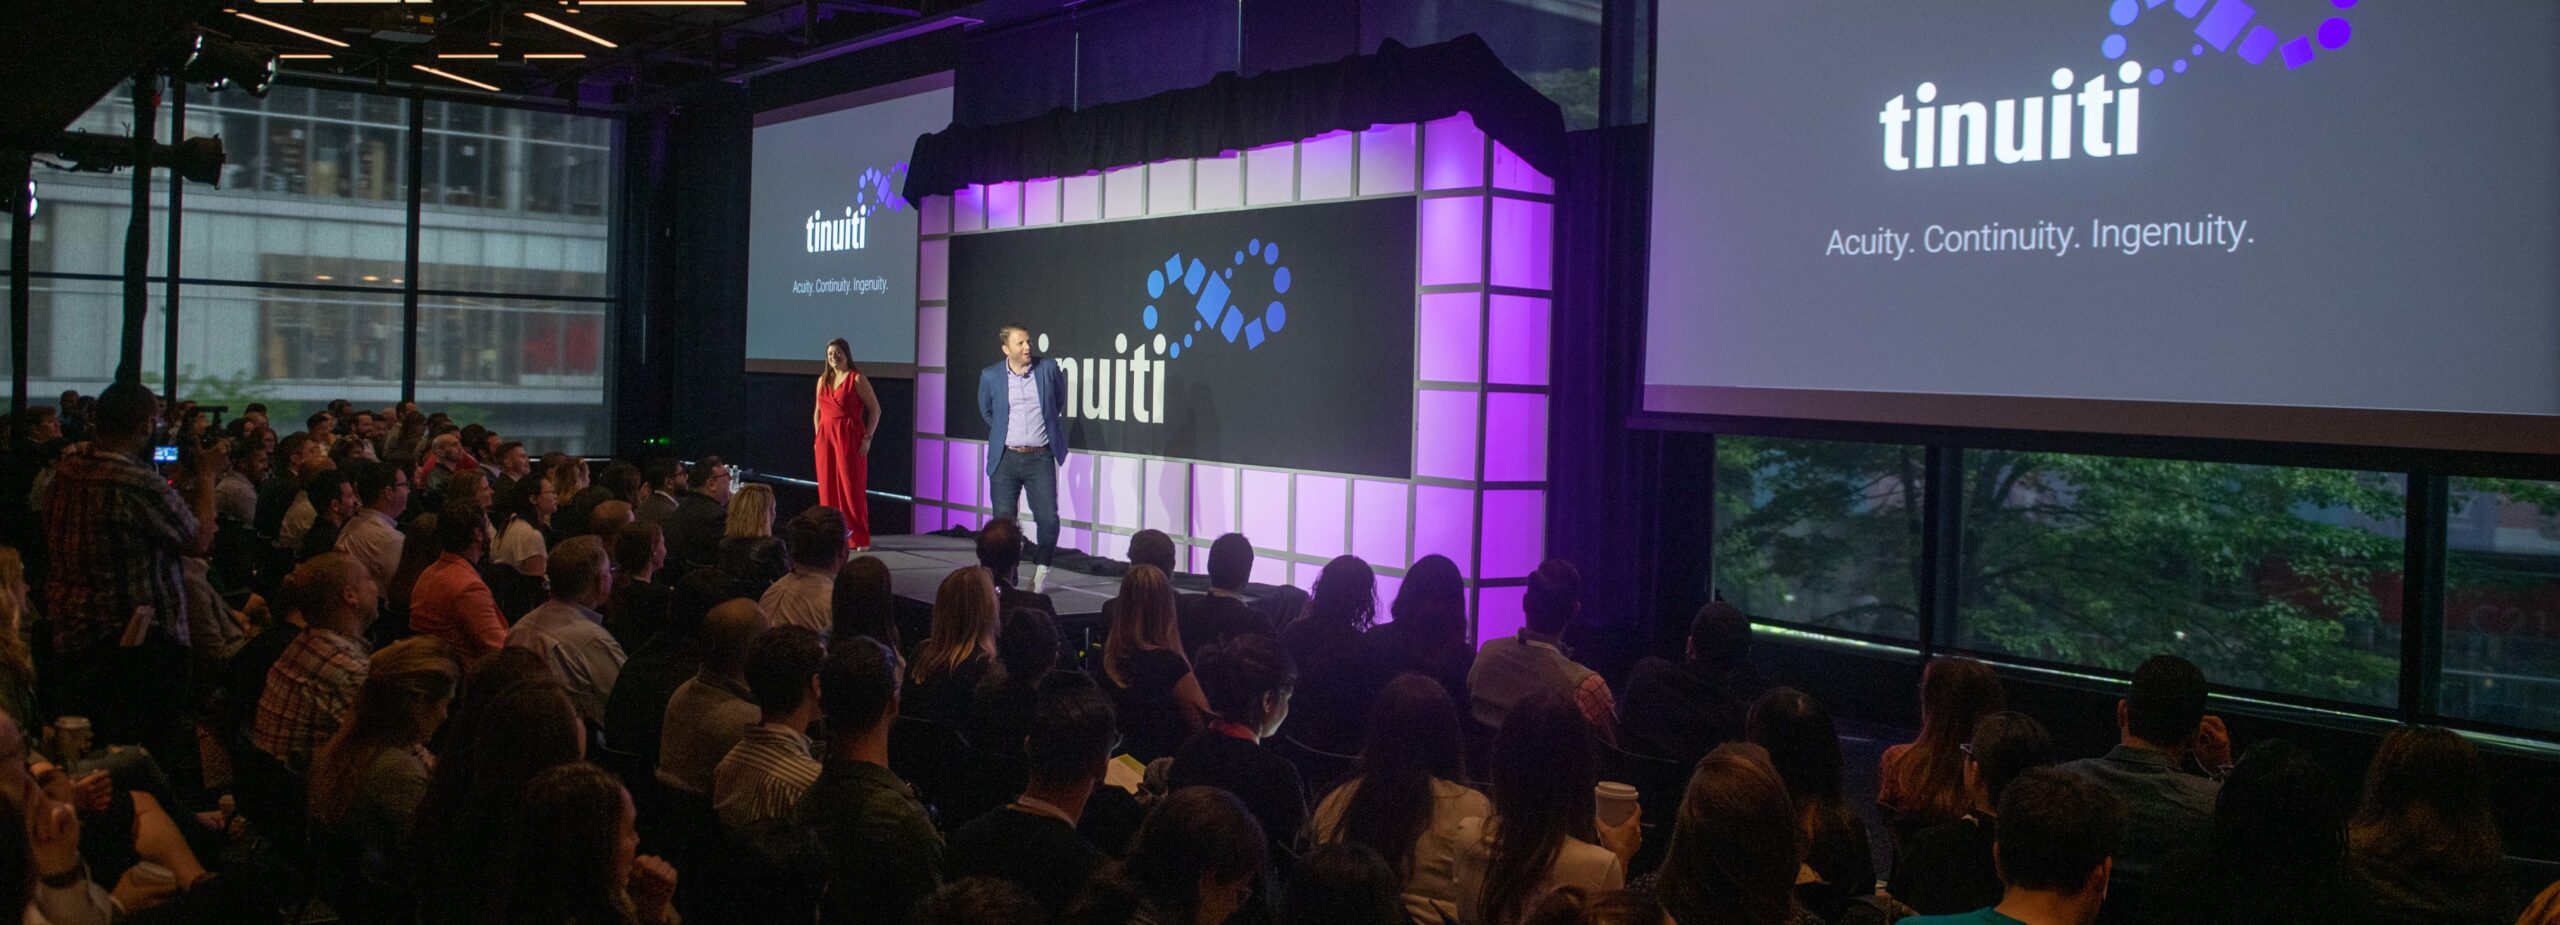 tinuiti growth summit rebrand announcement